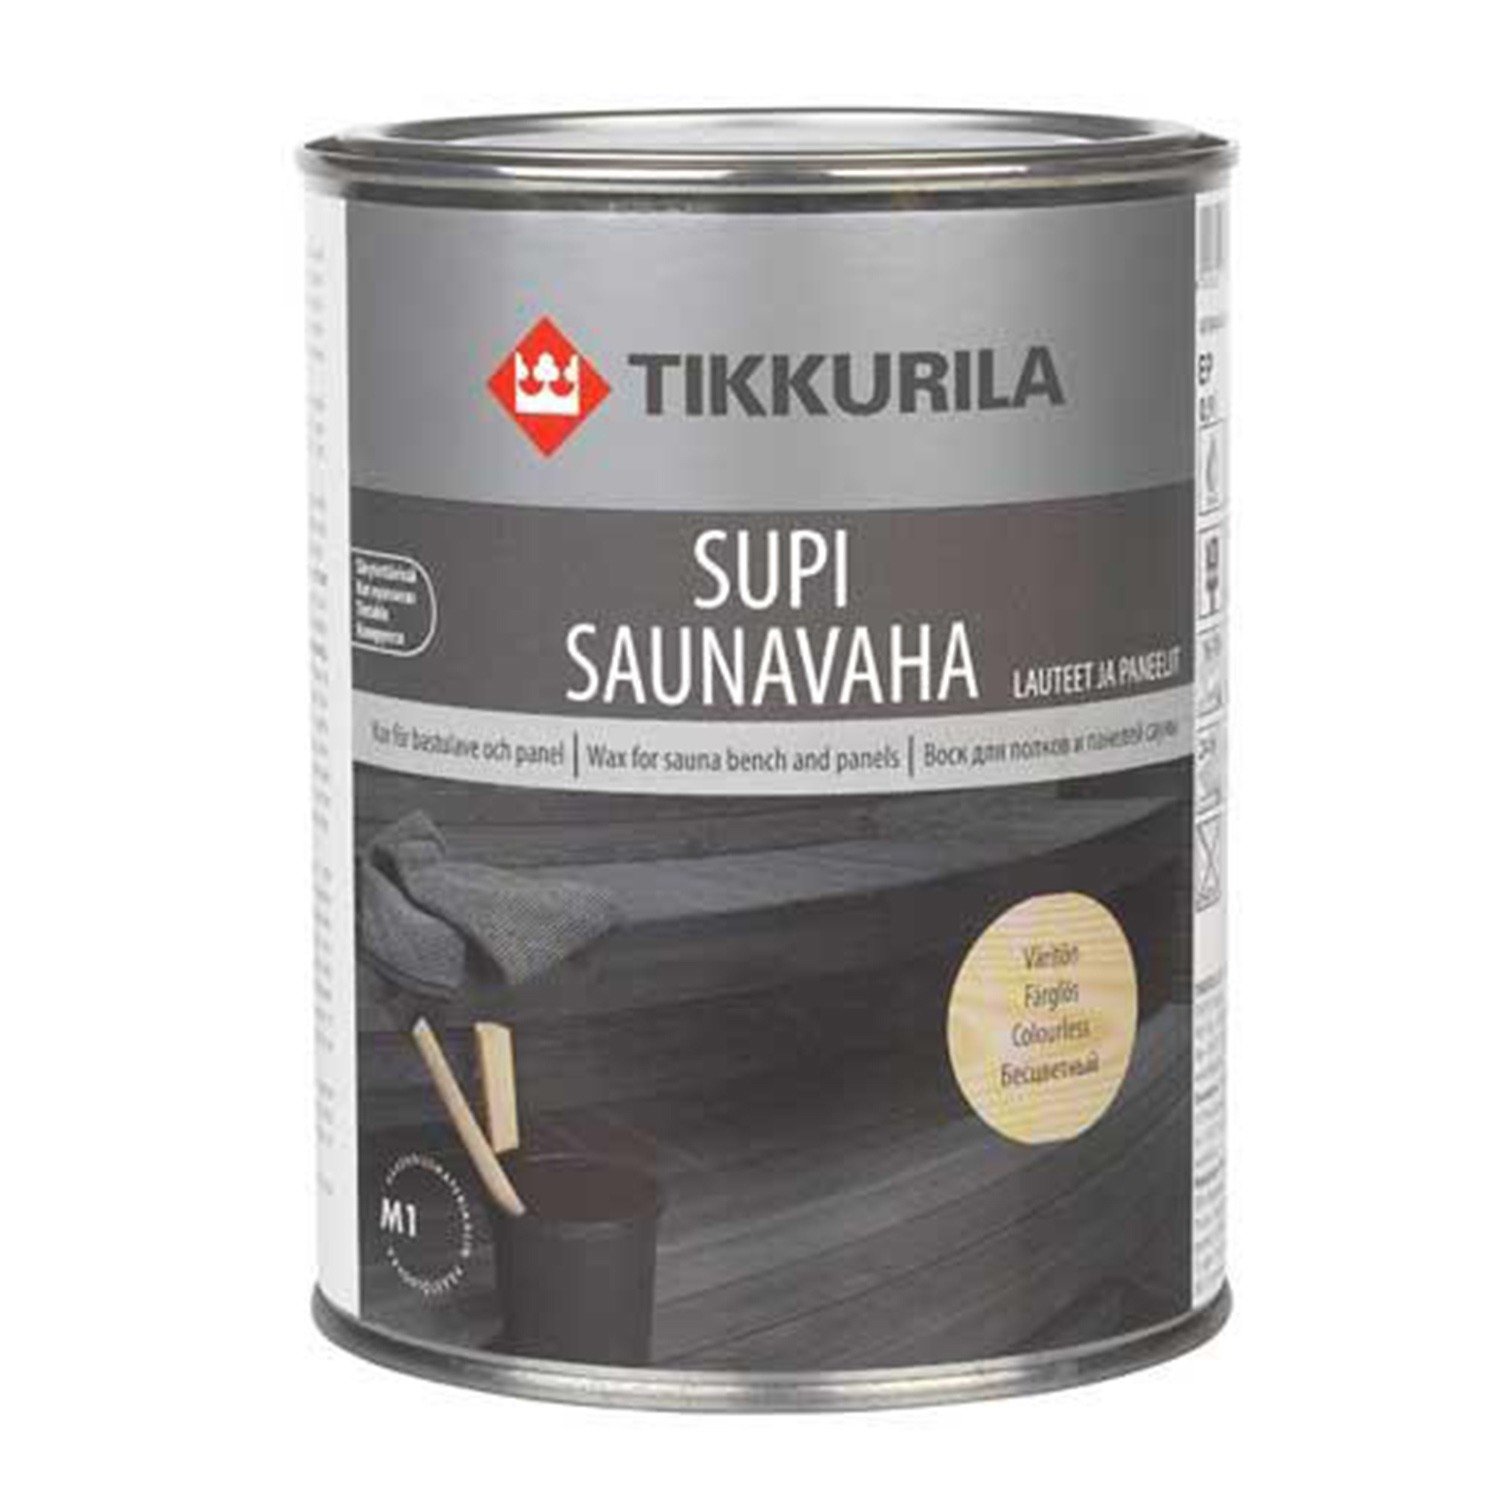 Тиккурила для бань купить. Tikkurila Supi saunavaha. Тиккурила супи Саунаваха (Supi saunavaha) воск для сауны (0,225л). Тиккурила супи сауна воск. Воск для бани Тиккурила.